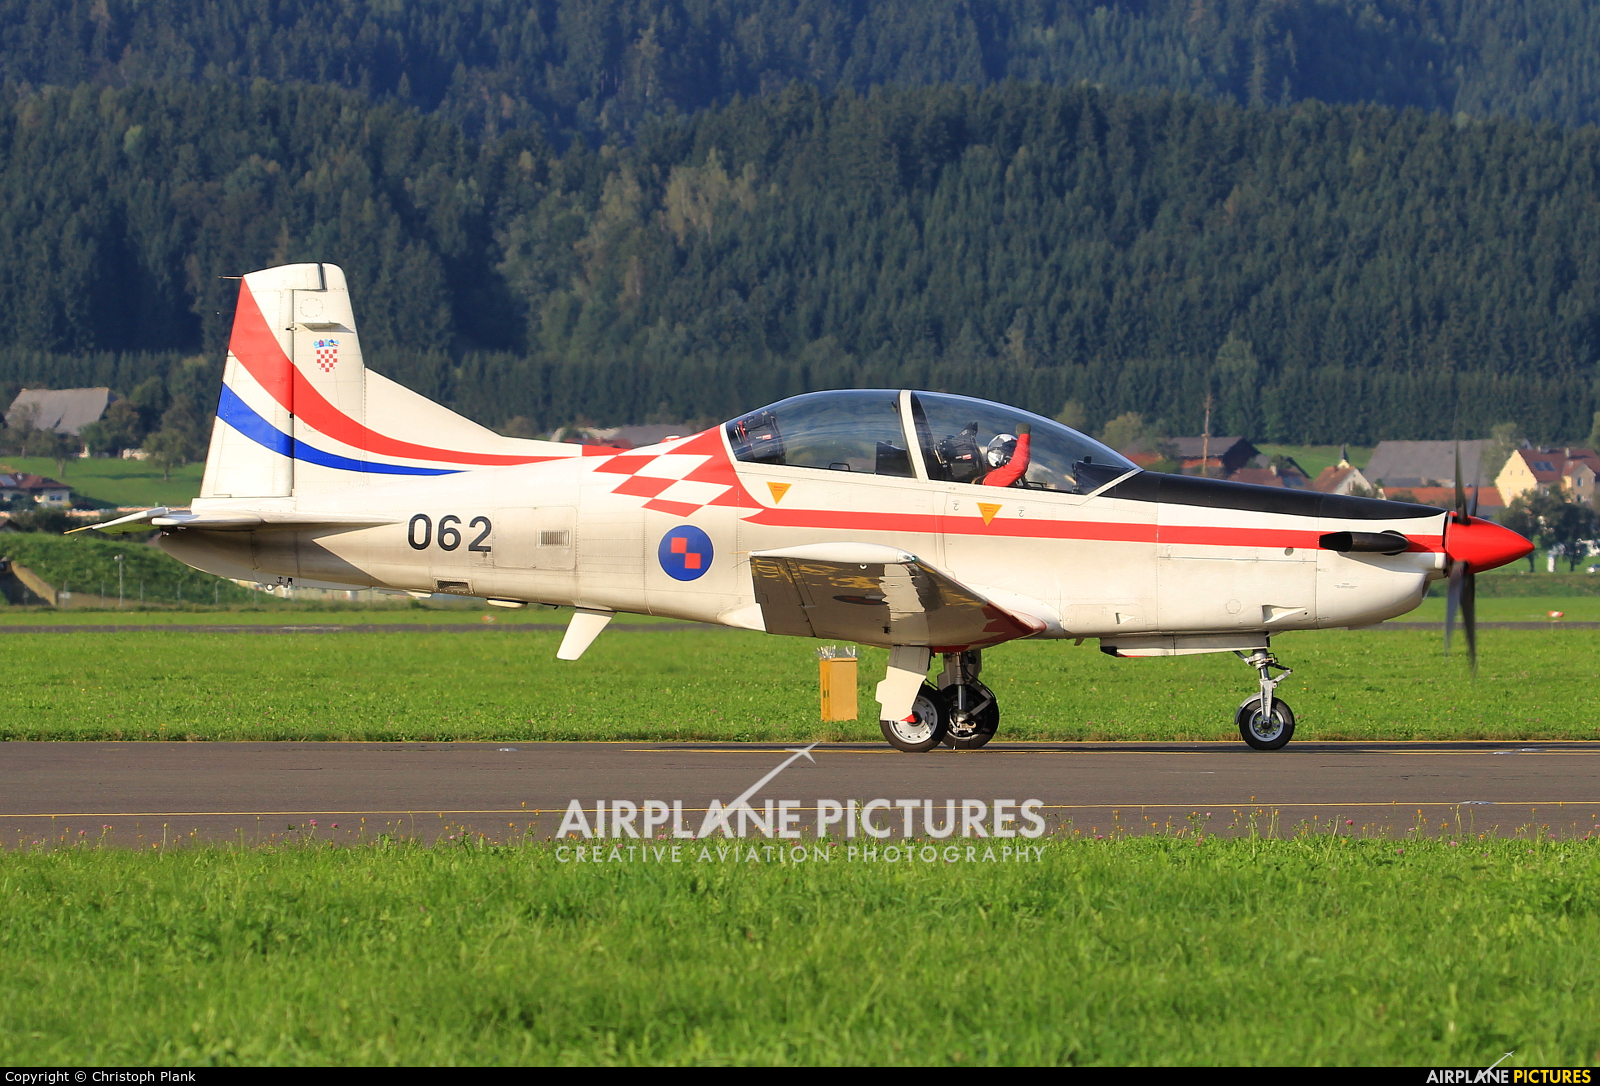 Croatia - Air Force 062 aircraft at Zeltweg